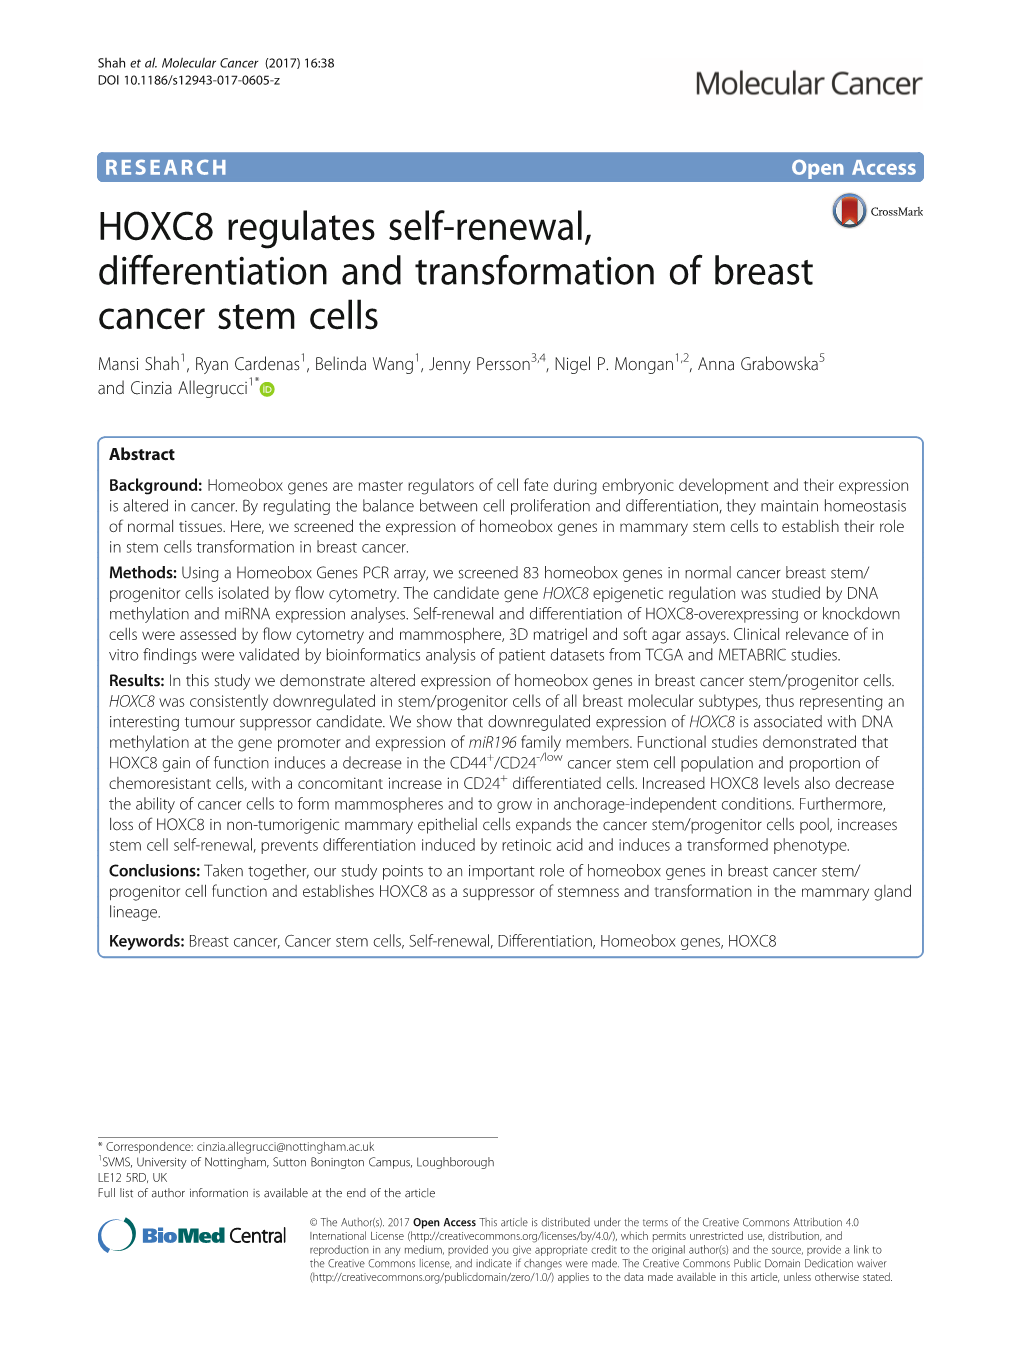 HOXC8 Regulates Self-Renewal, Differentiation and Transformation of Breast Cancer Stem Cells Mansi Shah1, Ryan Cardenas1, Belinda Wang1, Jenny Persson3,4, Nigel P